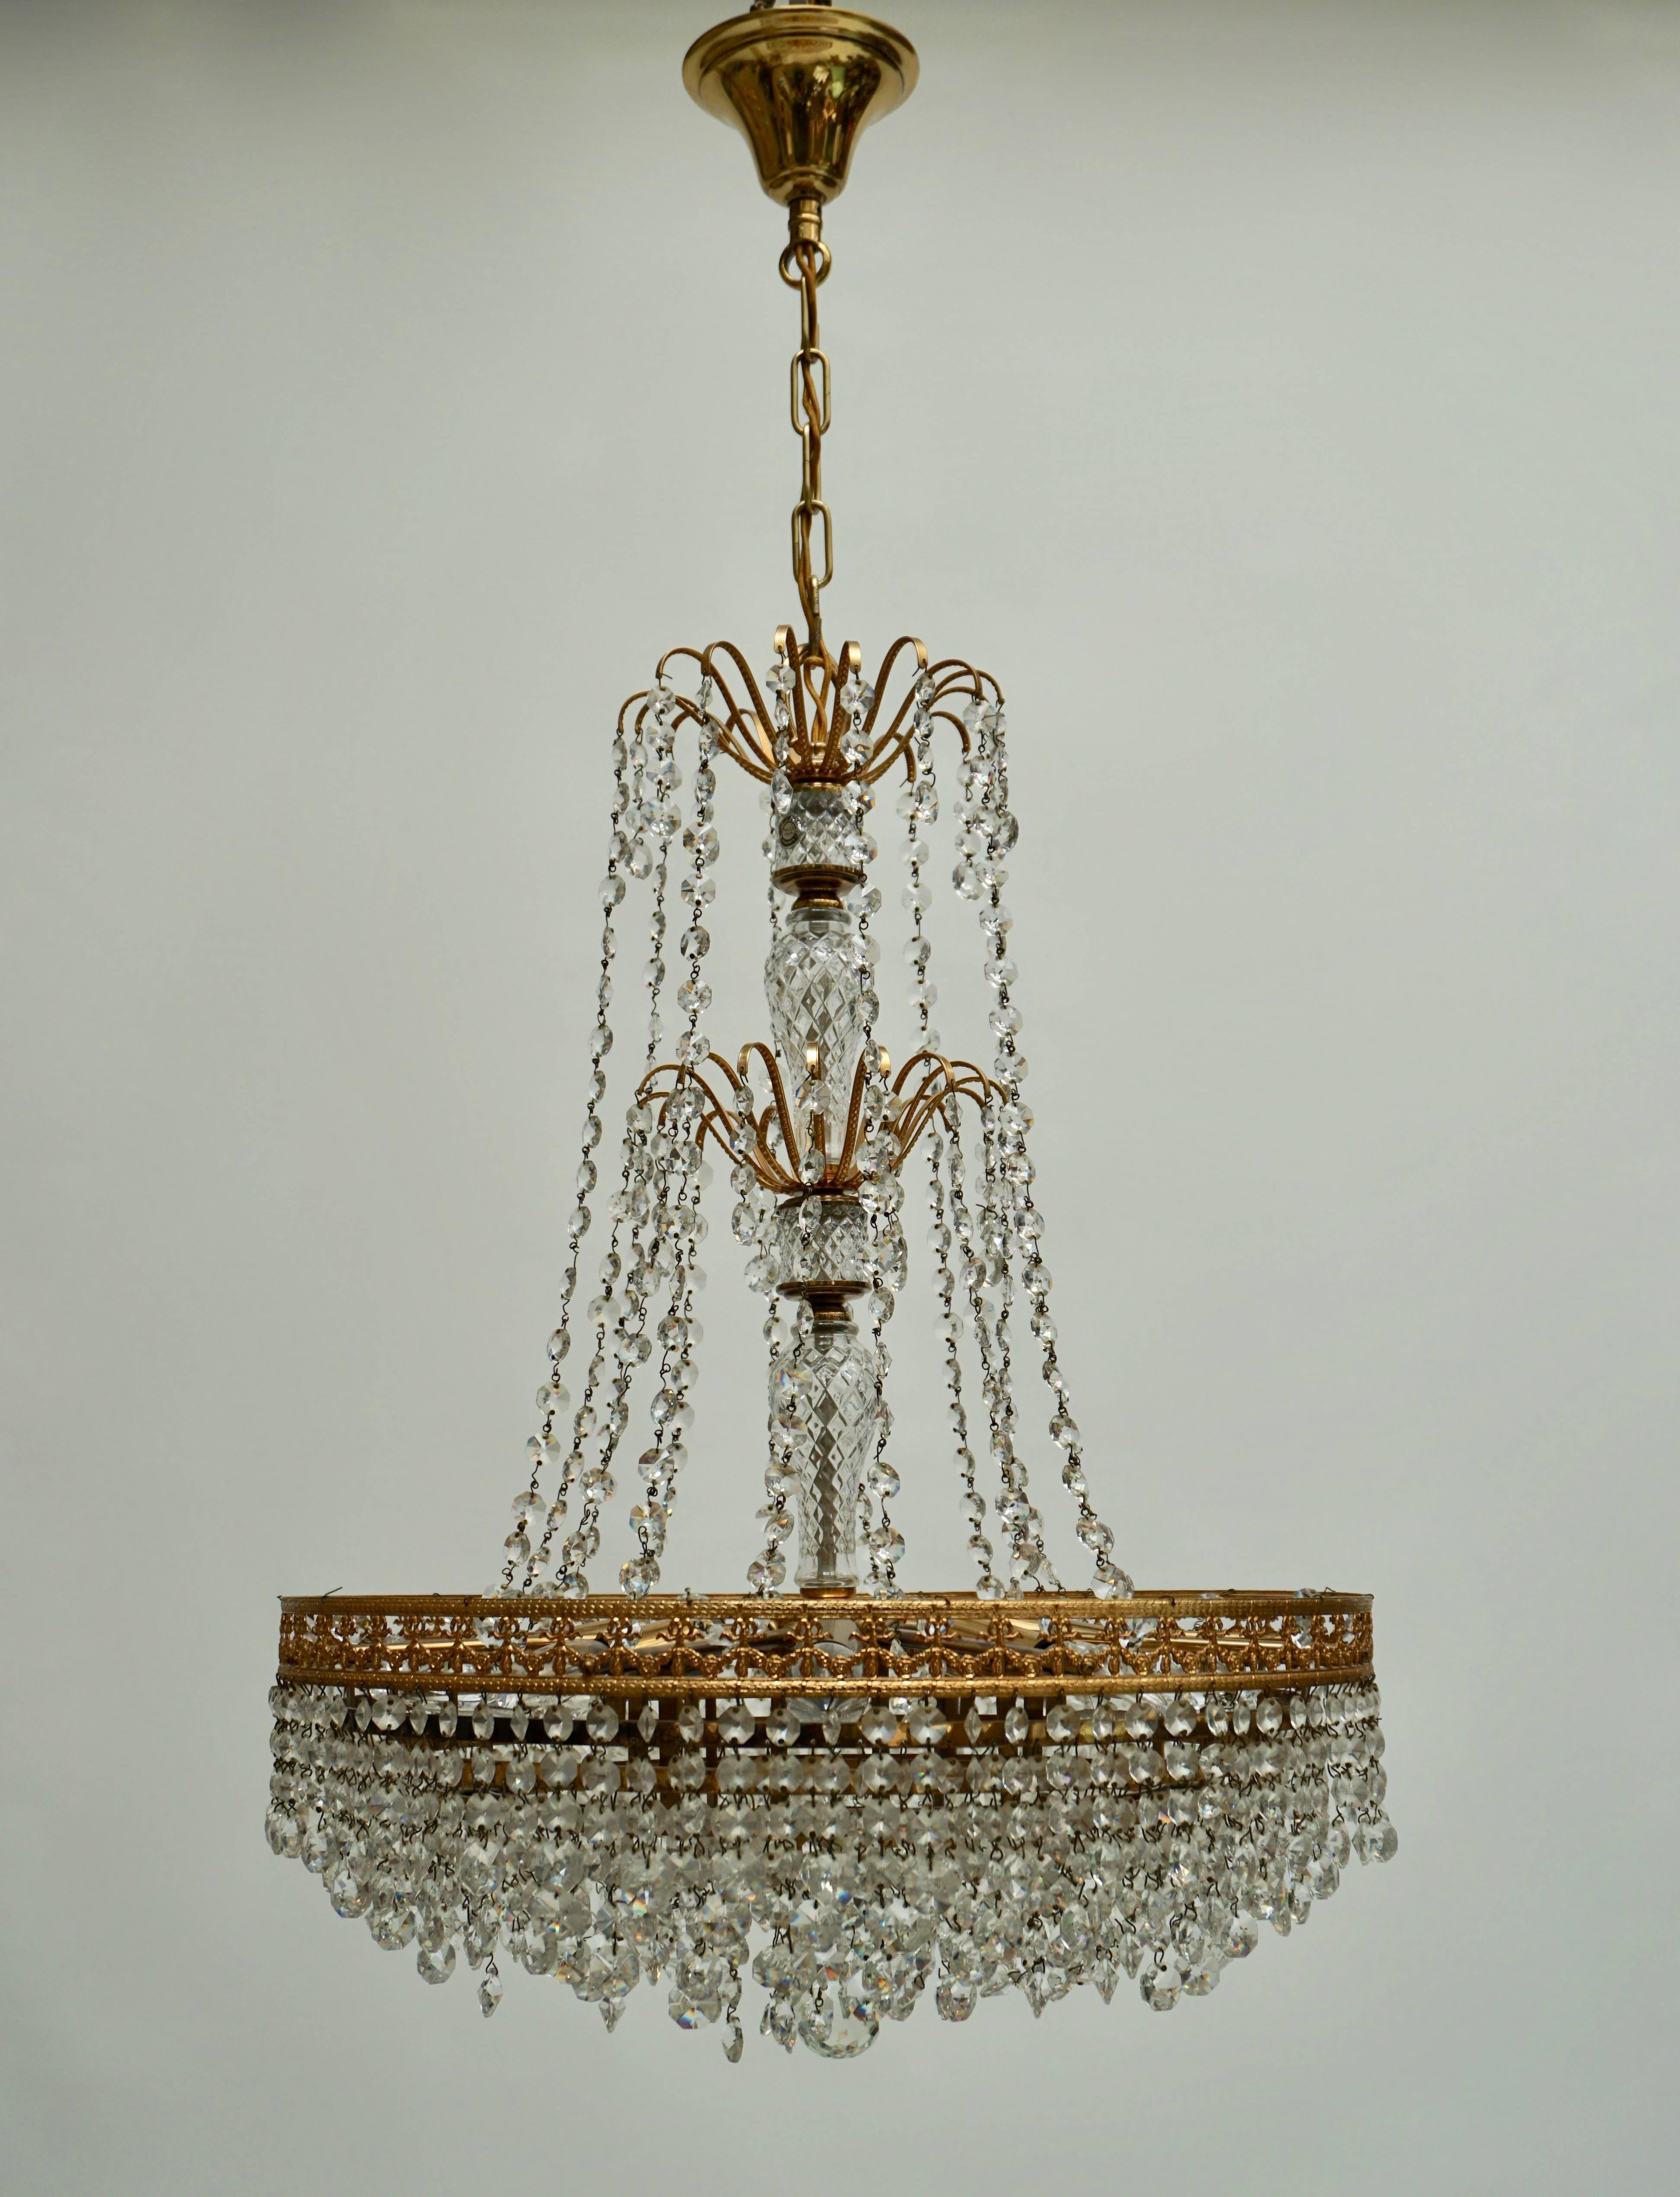 Crystal and brass chandelier, France.
Eight E14 bulbs.
Diameter 50 cm.
Height fixture 65 cm.
Total height 105 cm.